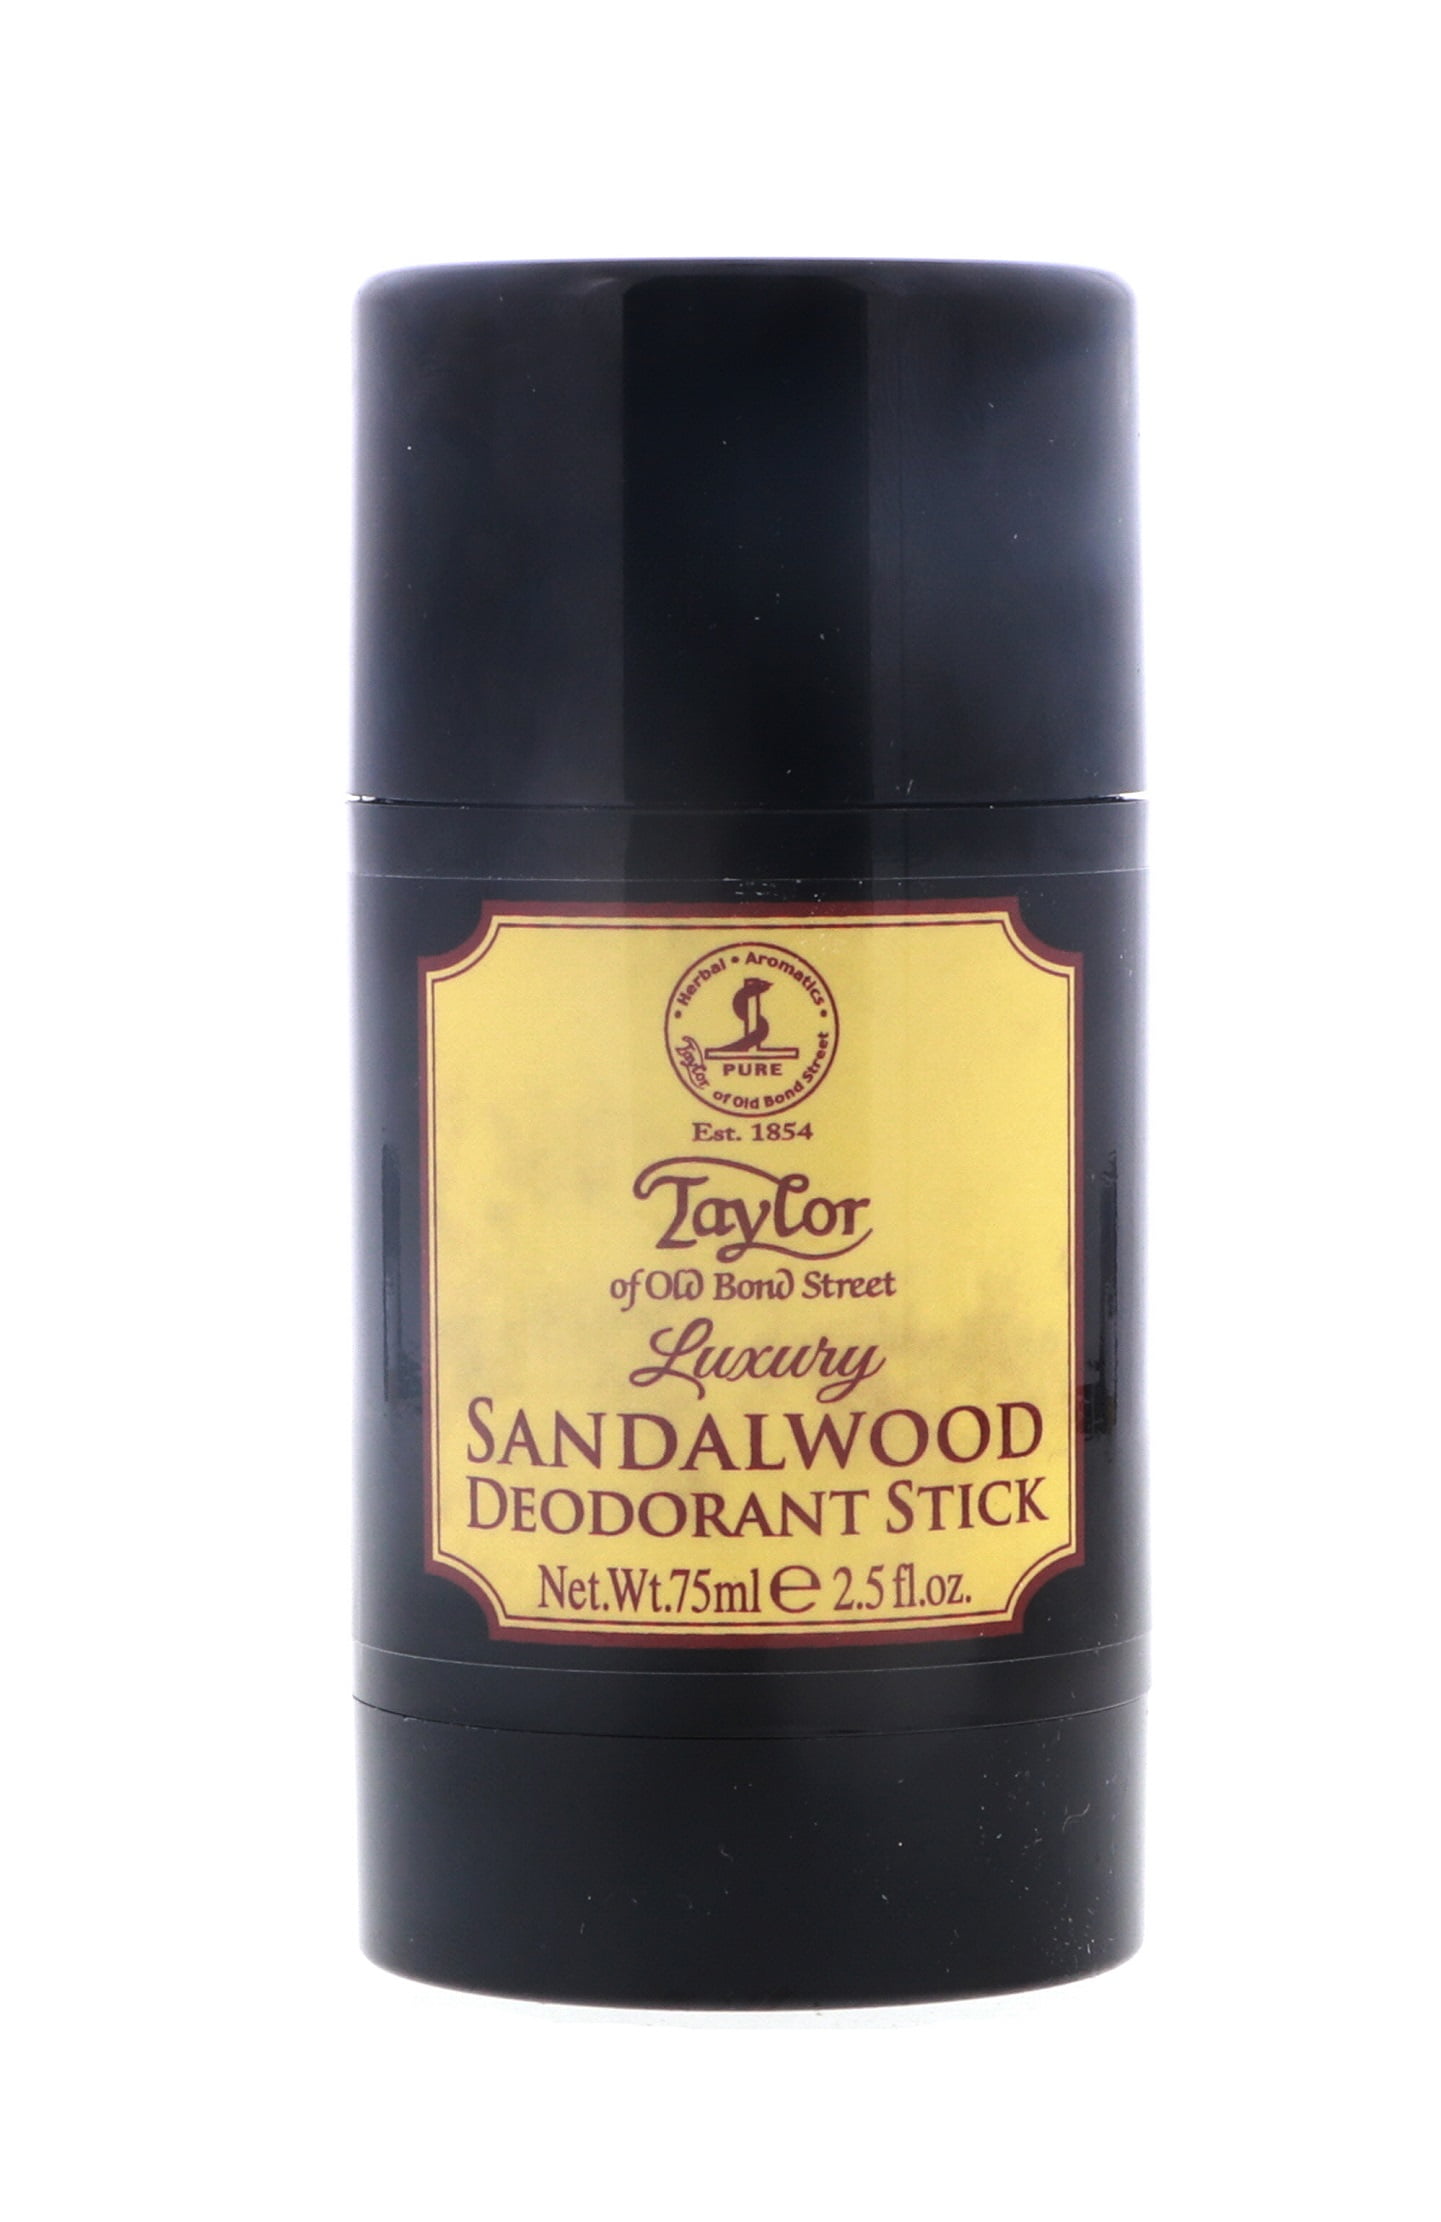 Sandalwood Deodorant Stick Deo Taylor Bond Street by Old of Stick) (2.5oz